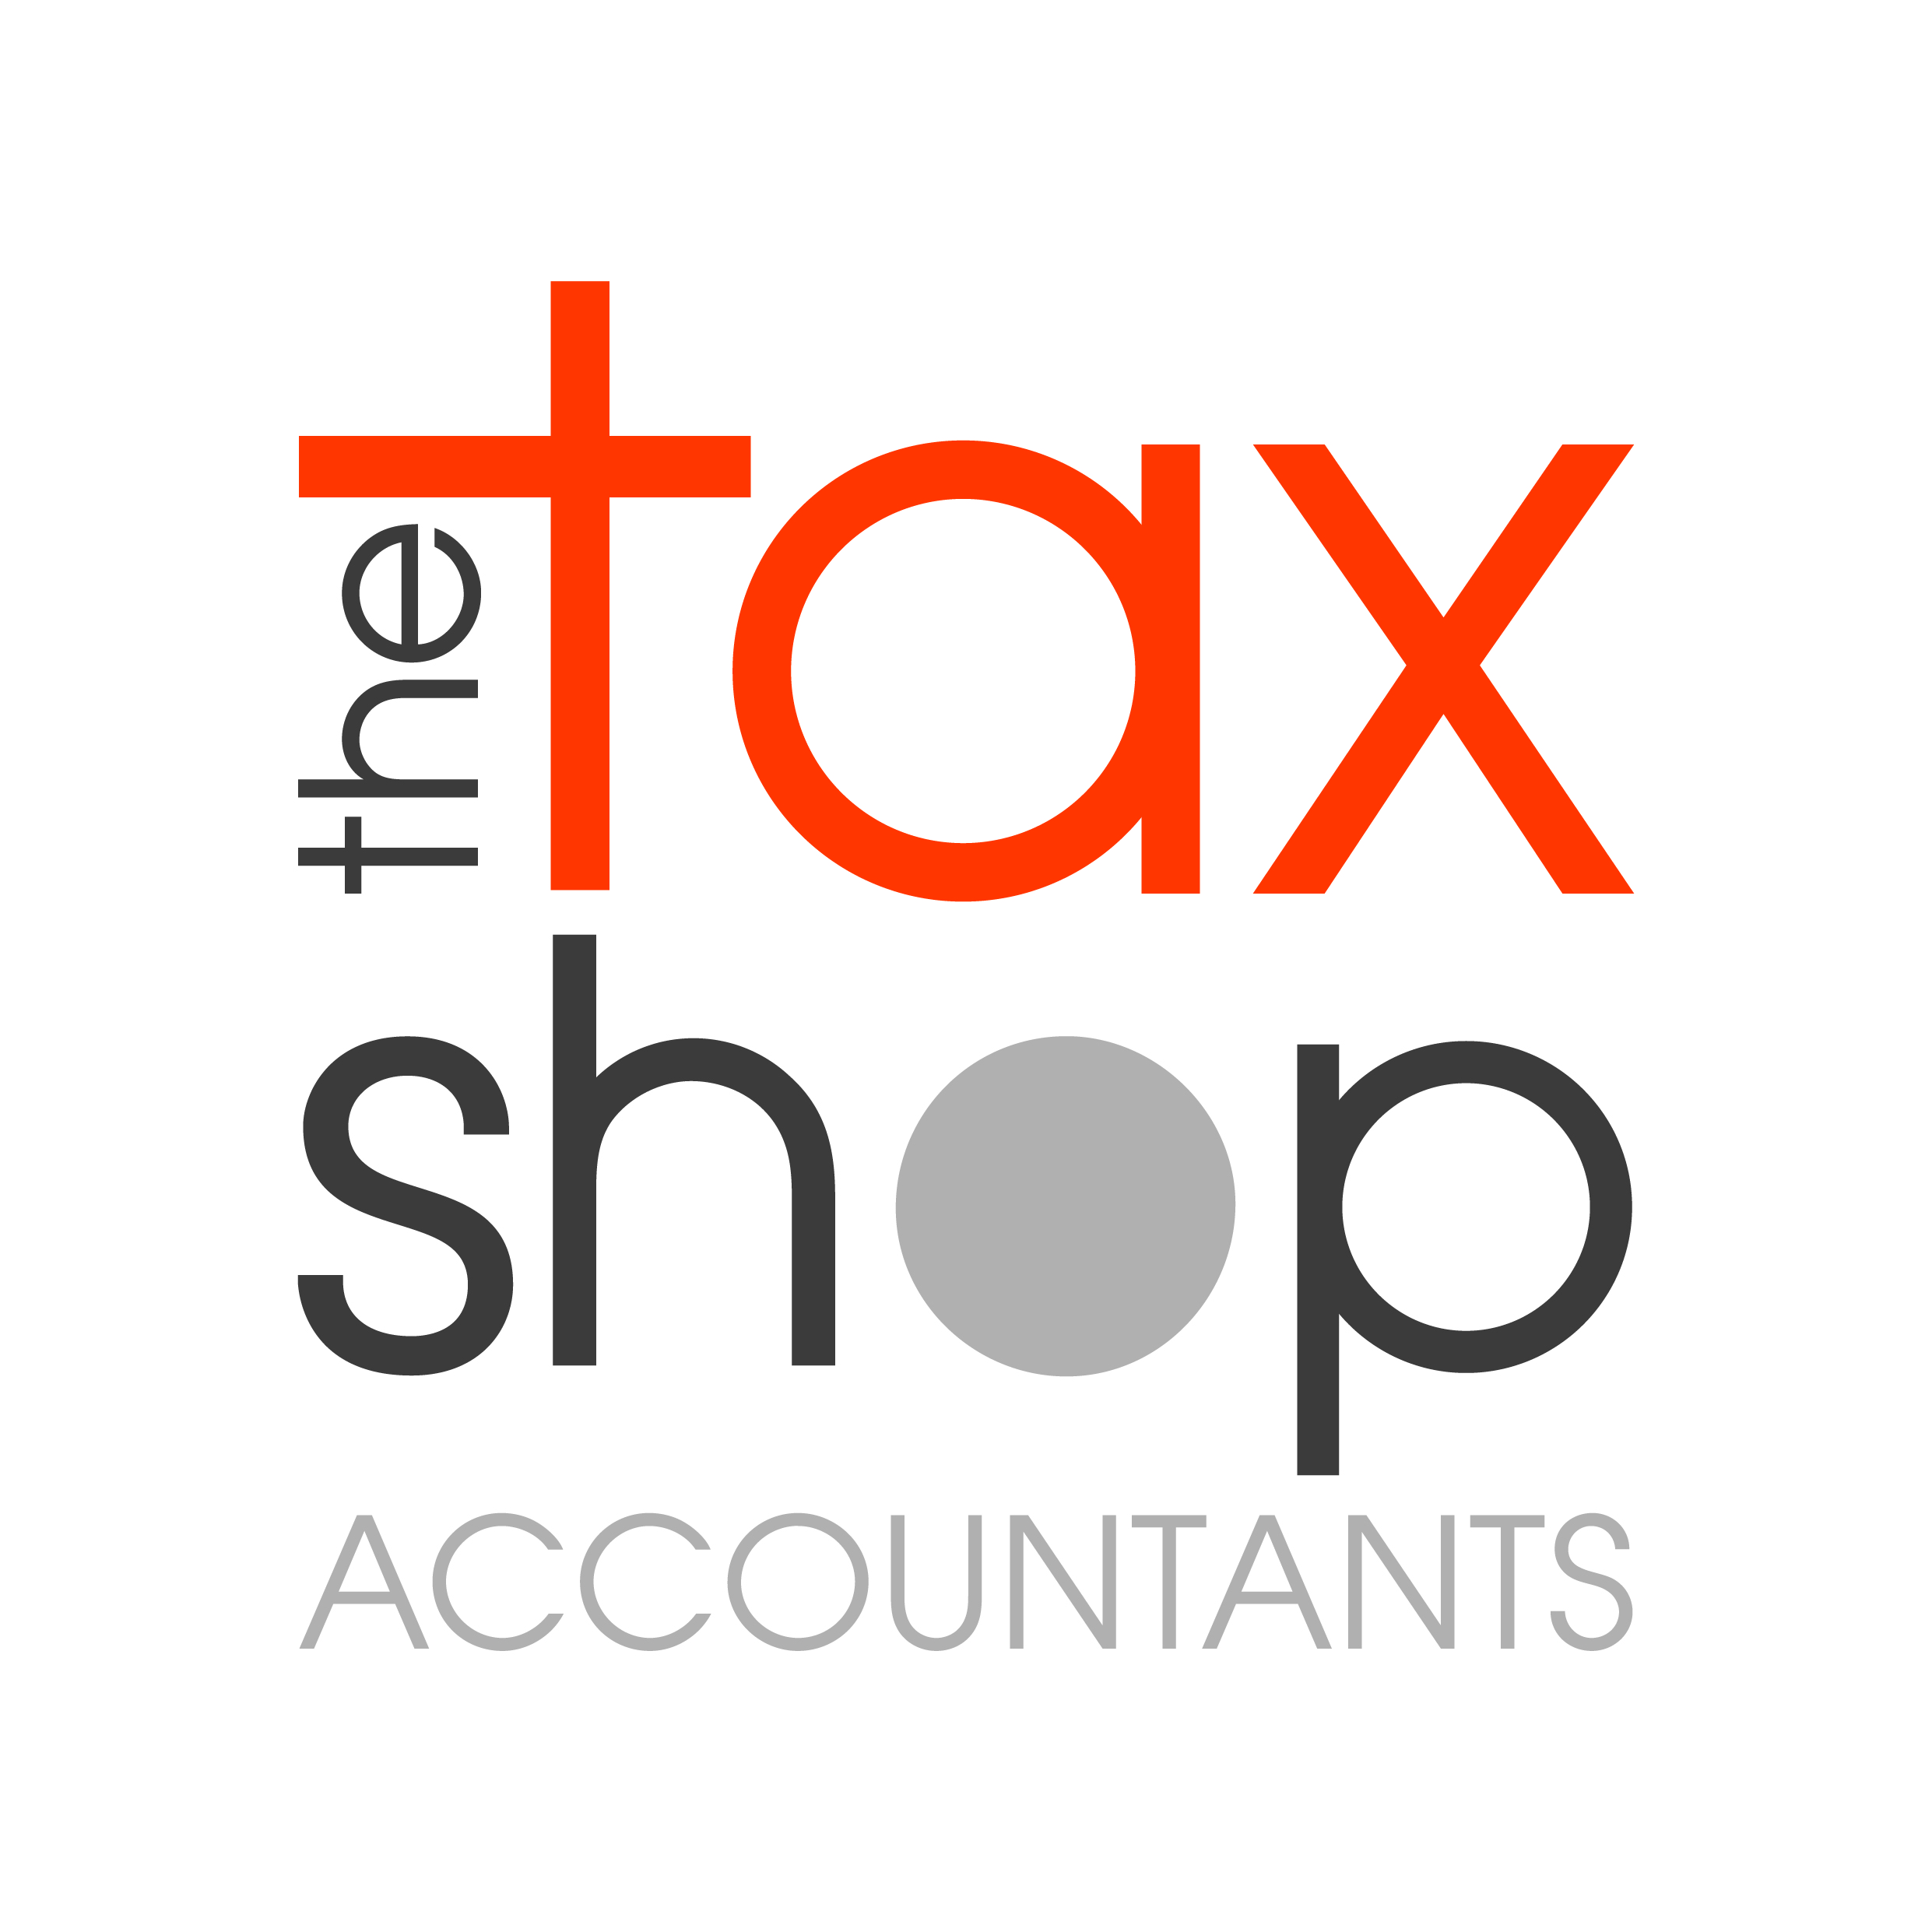 The Tax Shop Accountants